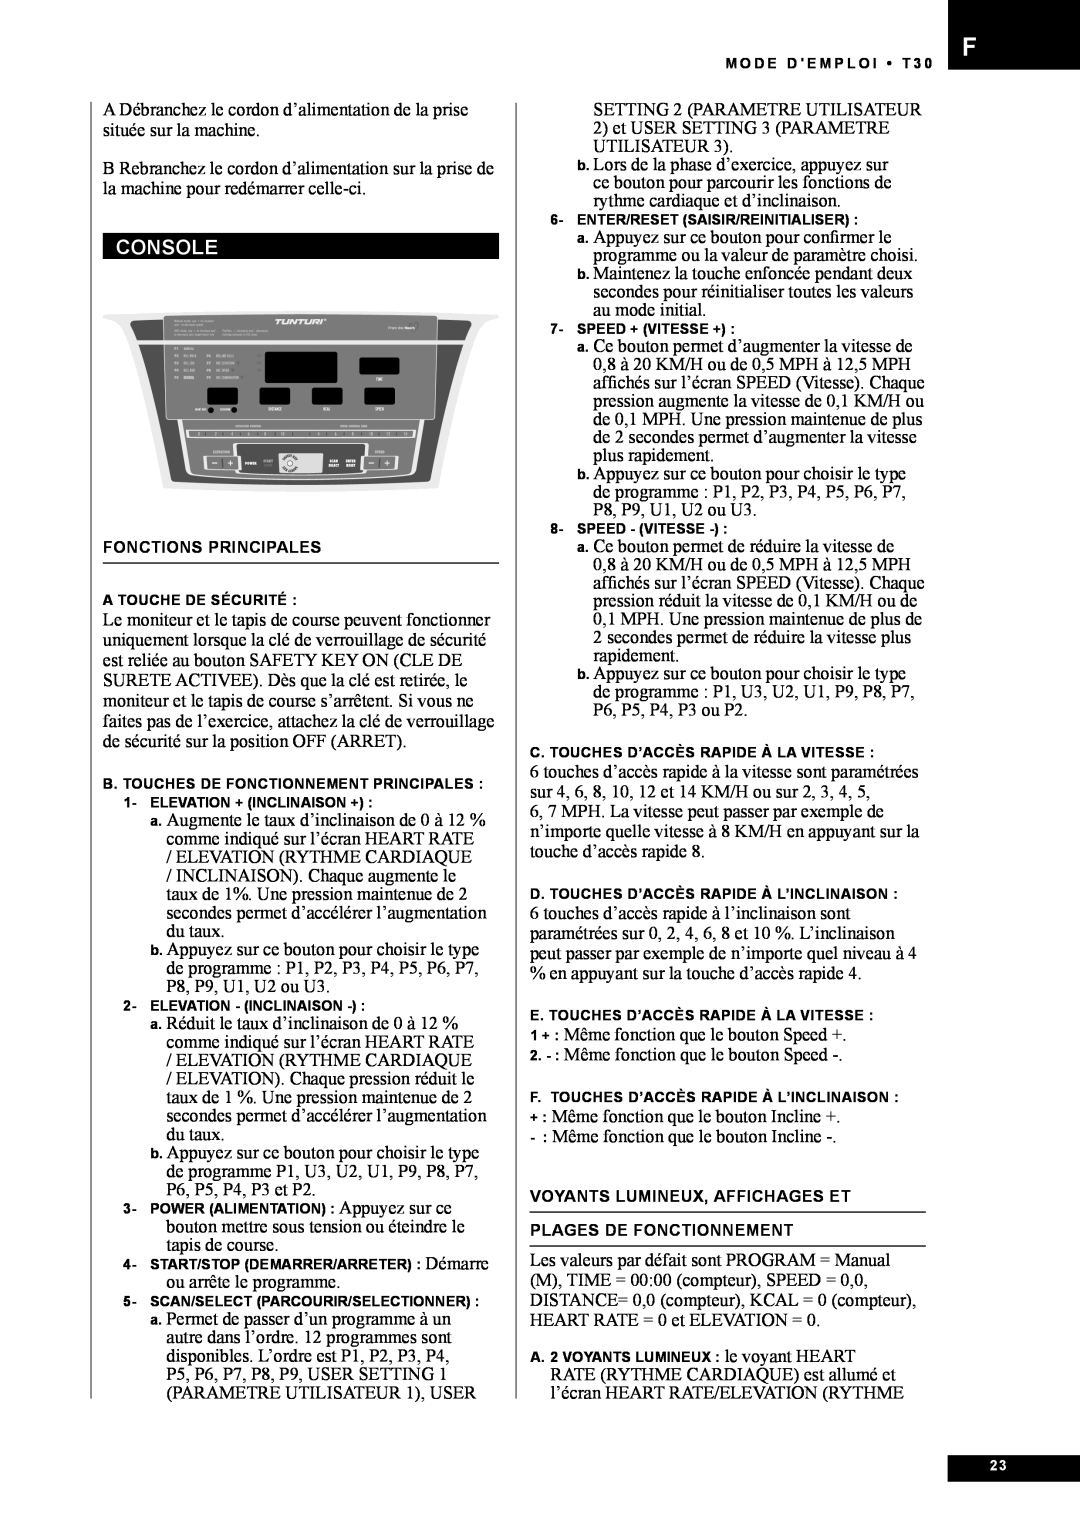 Tunturi T30 owner manual Console, Elevation Rythme Cardiaque 